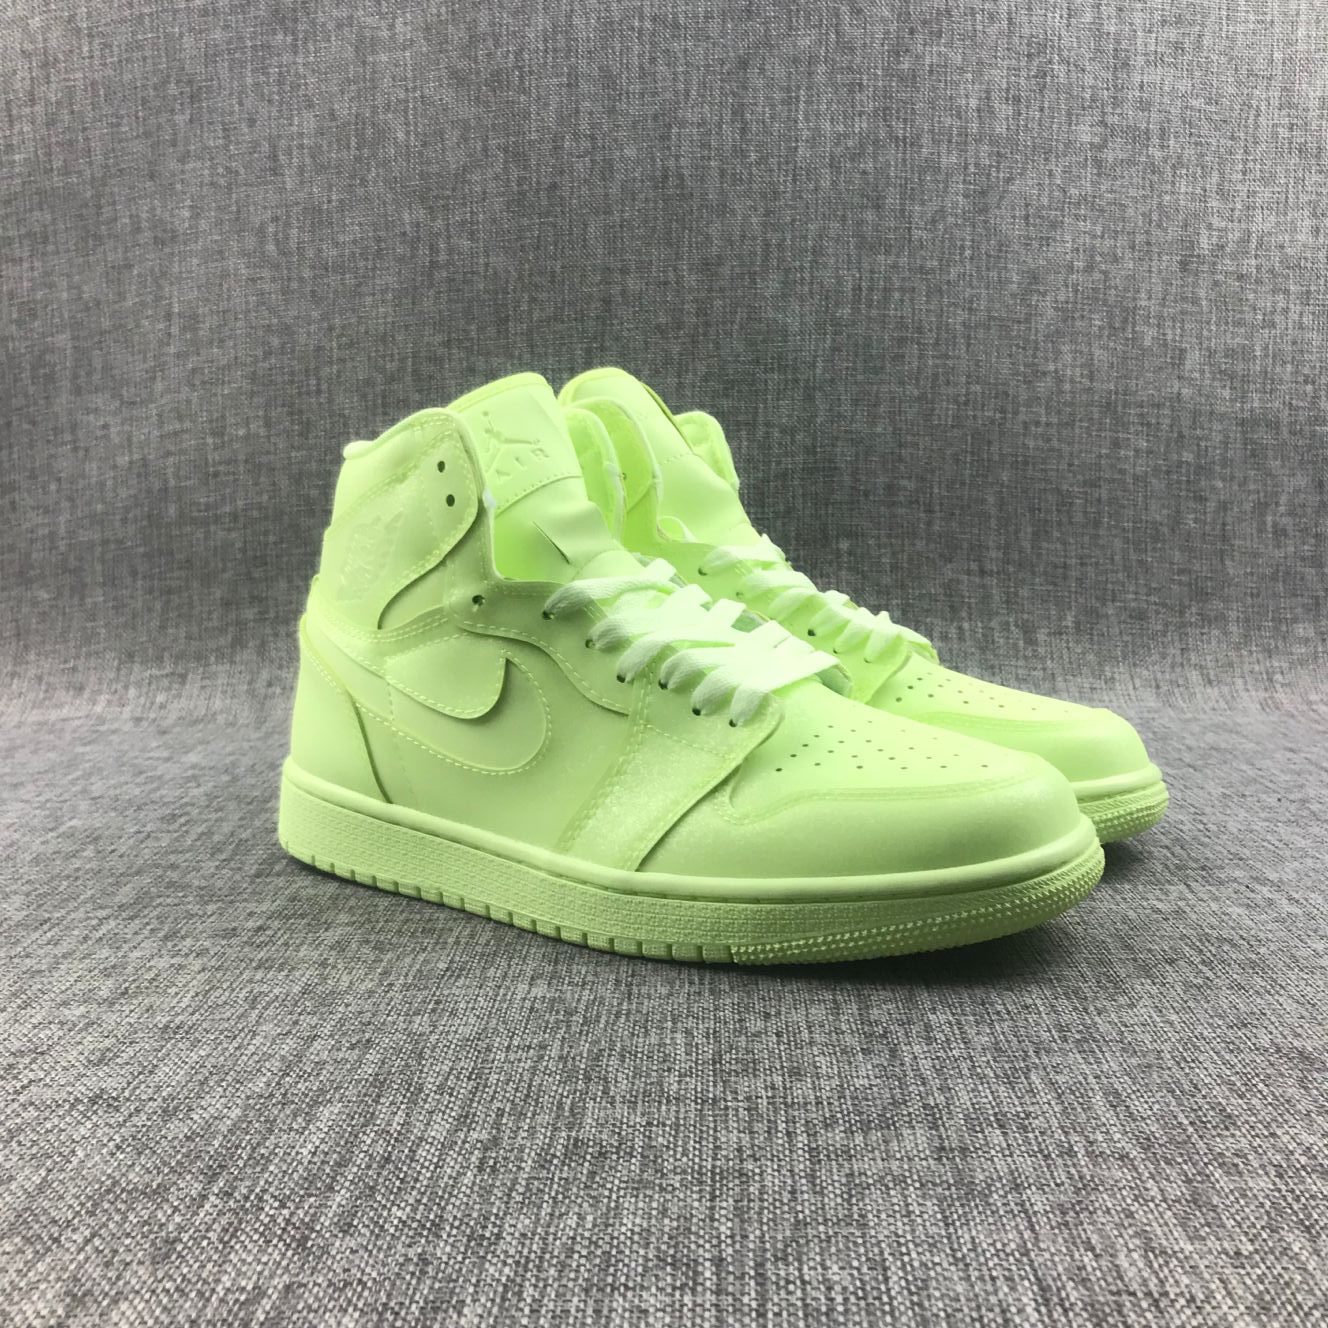 New Air Jordan 1 Mid Fluorscent Green Shoes - Click Image to Close